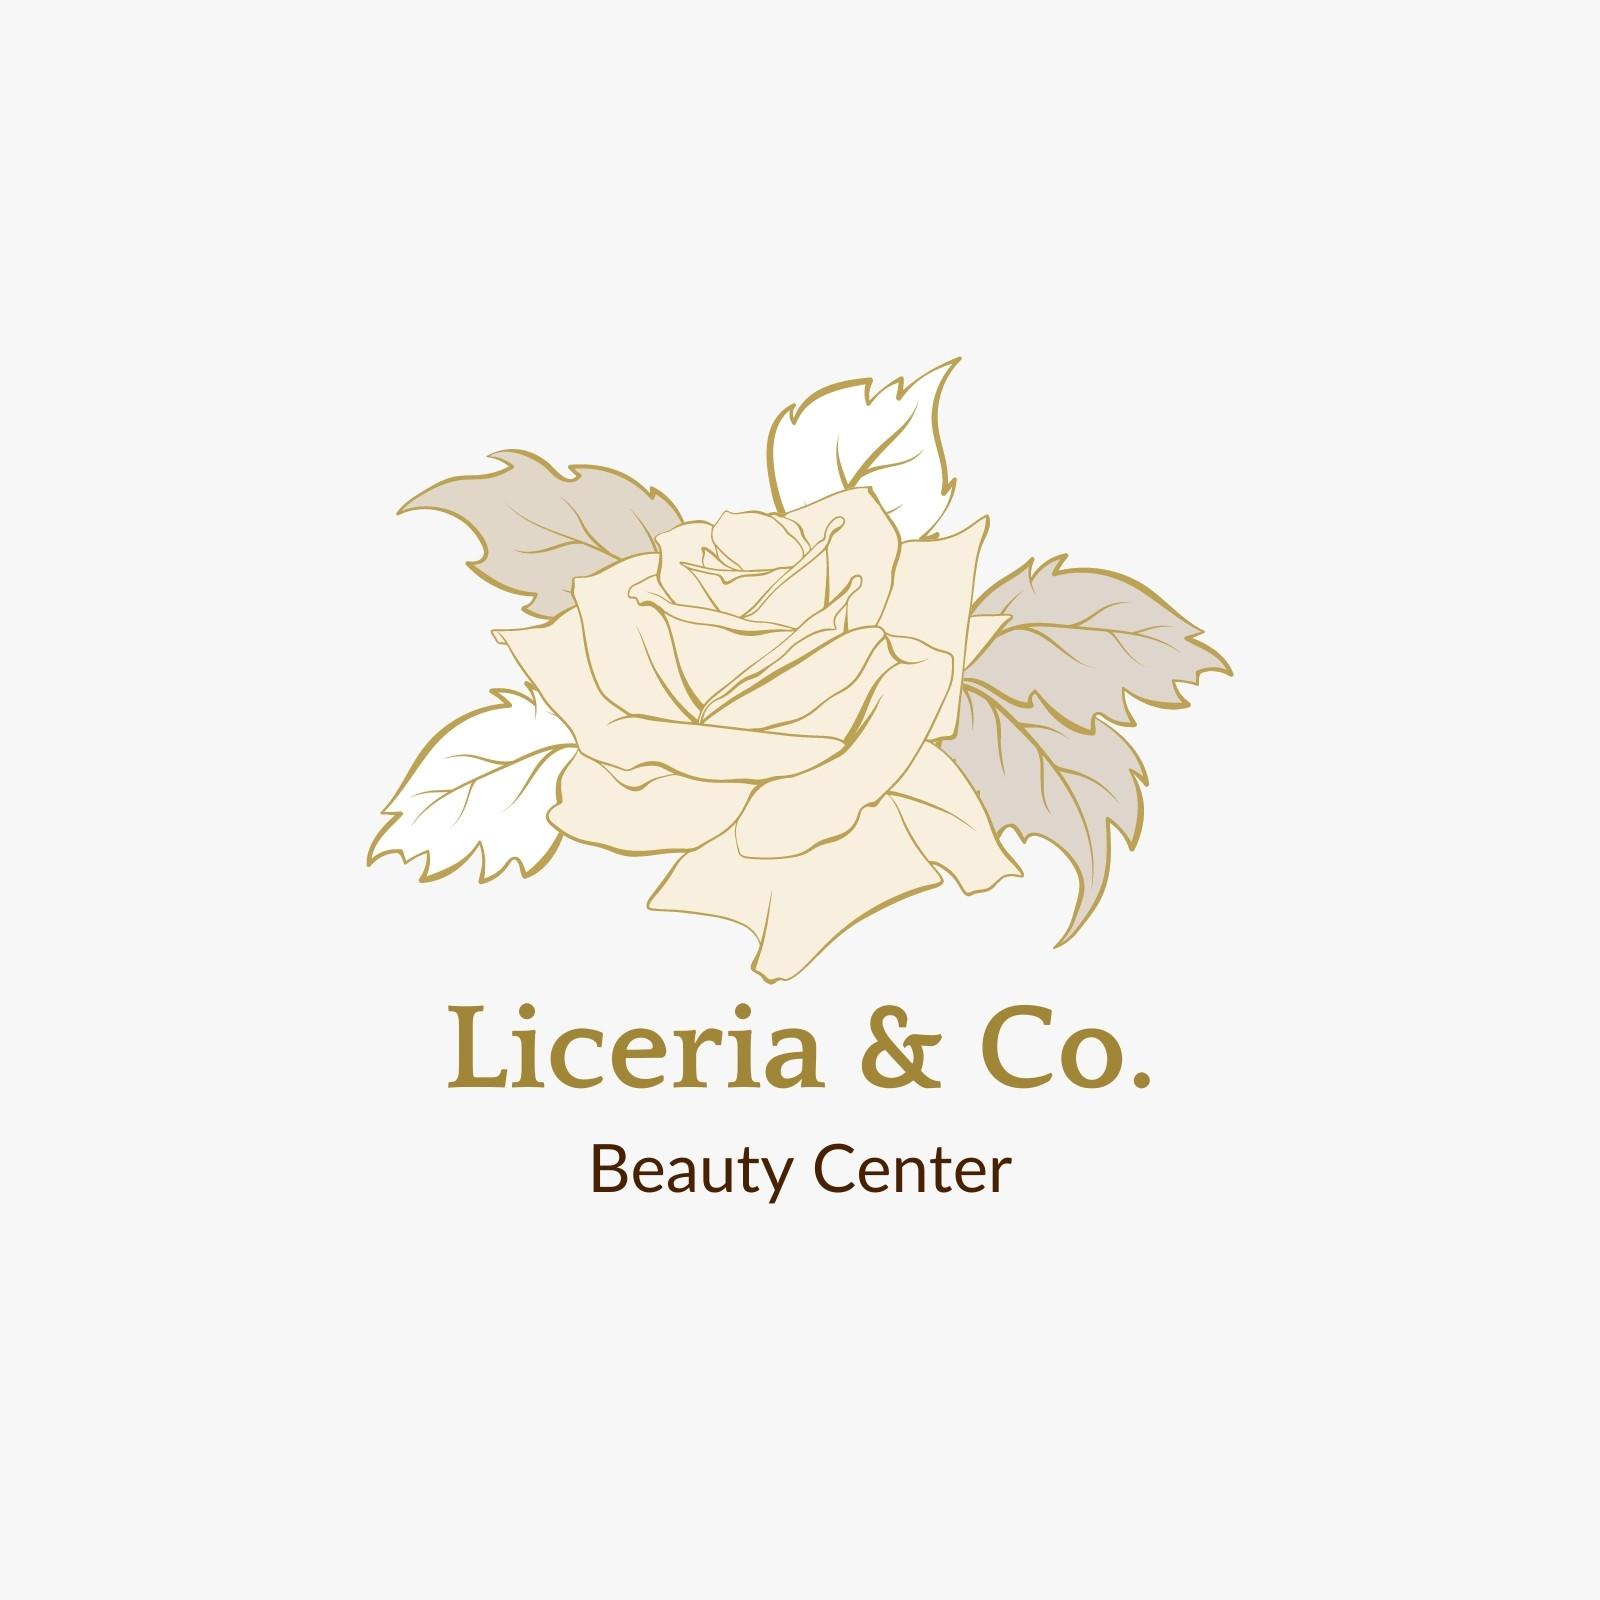 Premium Vector | Luxury rose flower logo design with business card